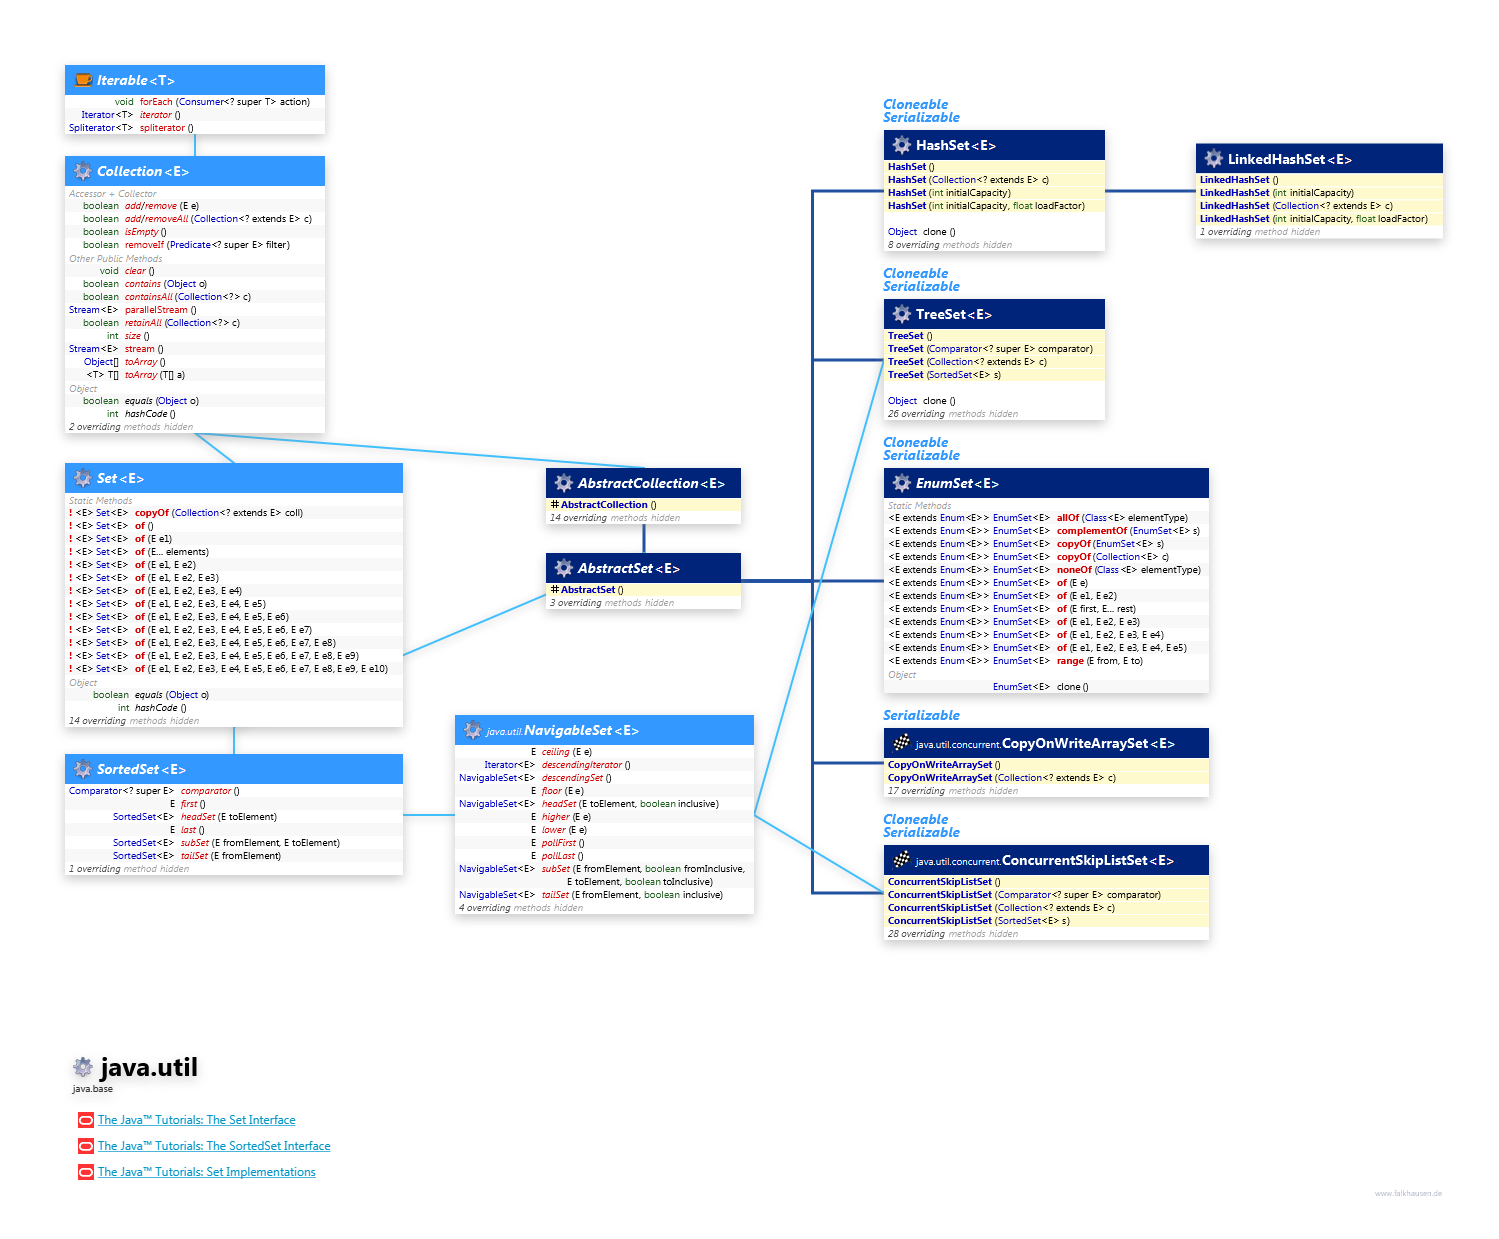 java.util Collection Set class diagram and api documentation for Java 10